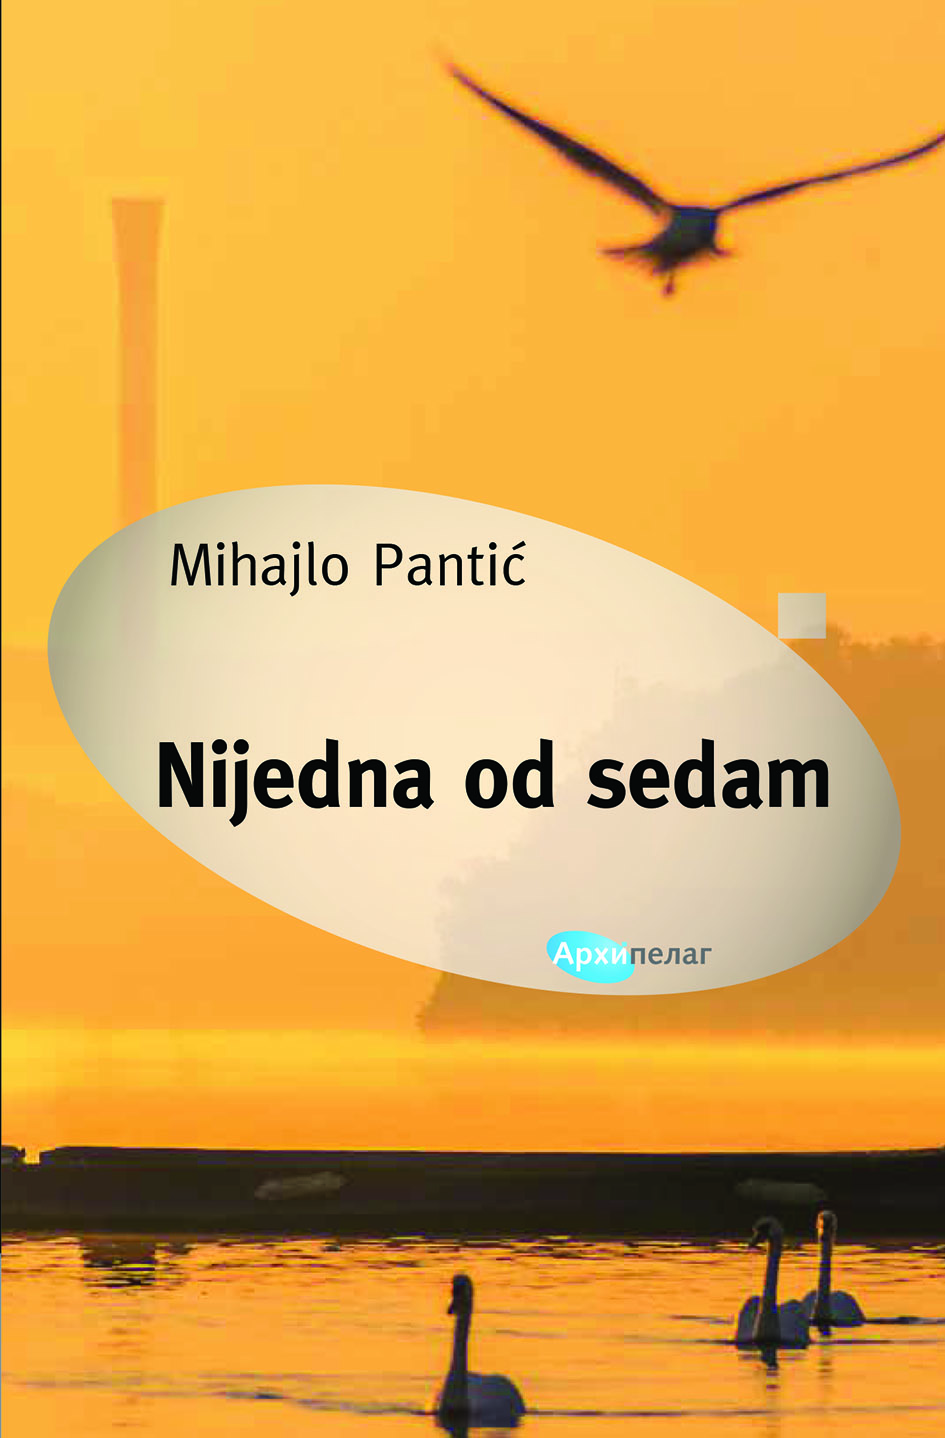 Mihajlo Pantić, Nijedna od sedam, knjiga, korice Mihajlo Pantić